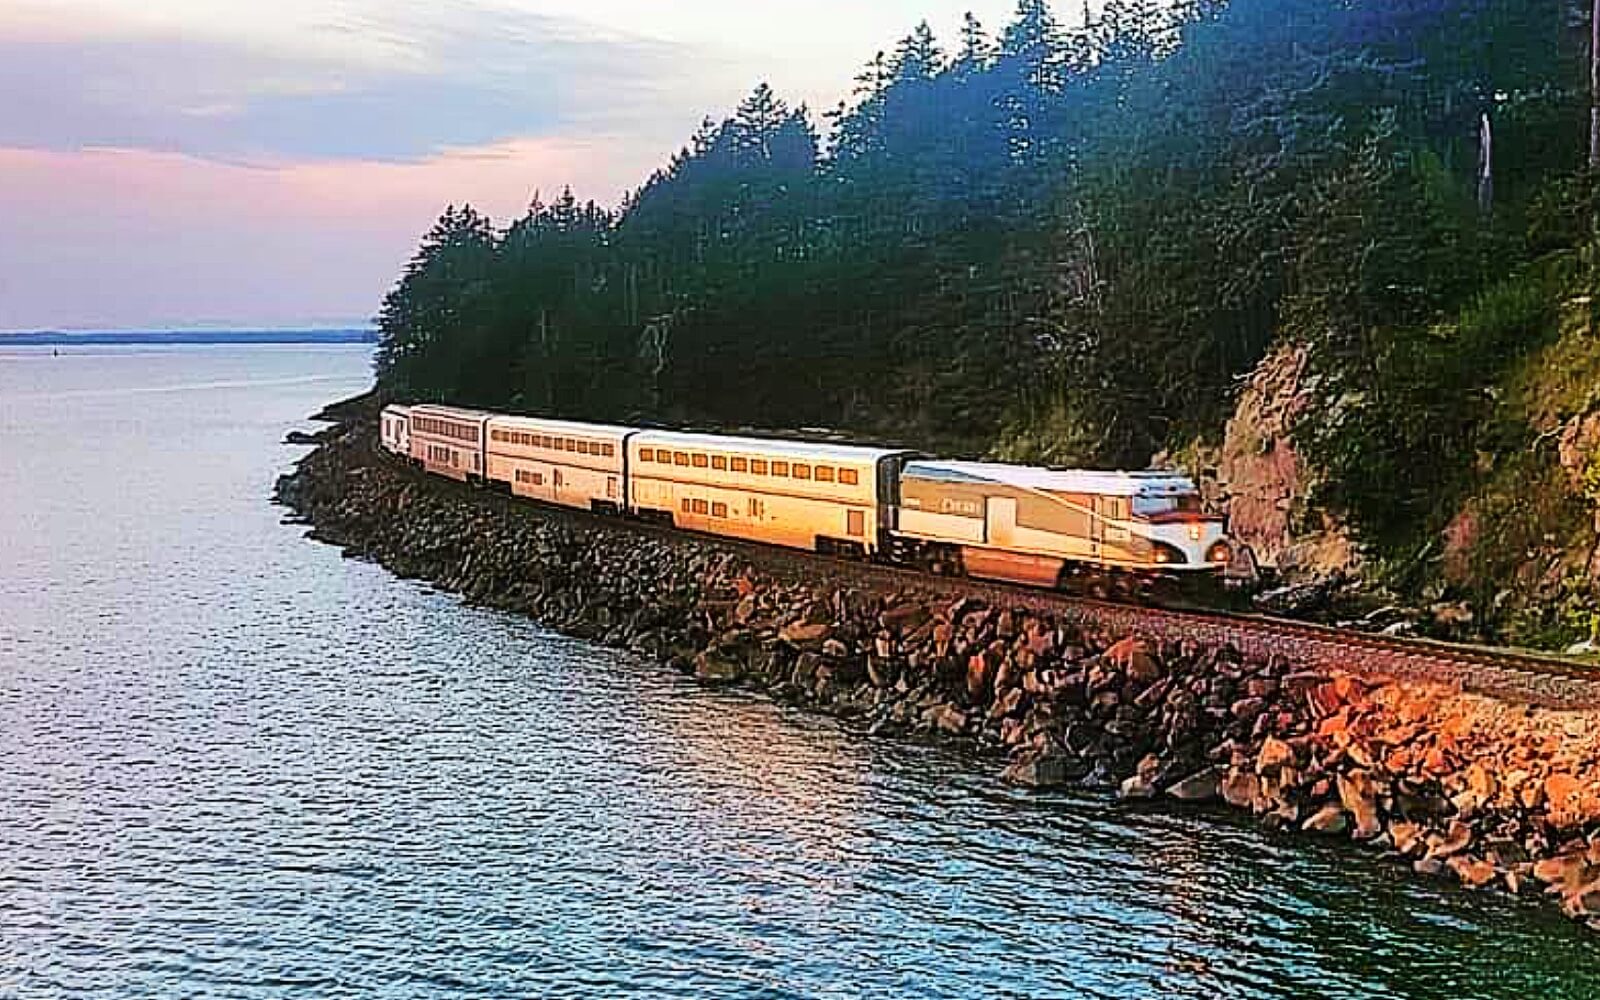 The Amtrak Cascades travels alongside the coast